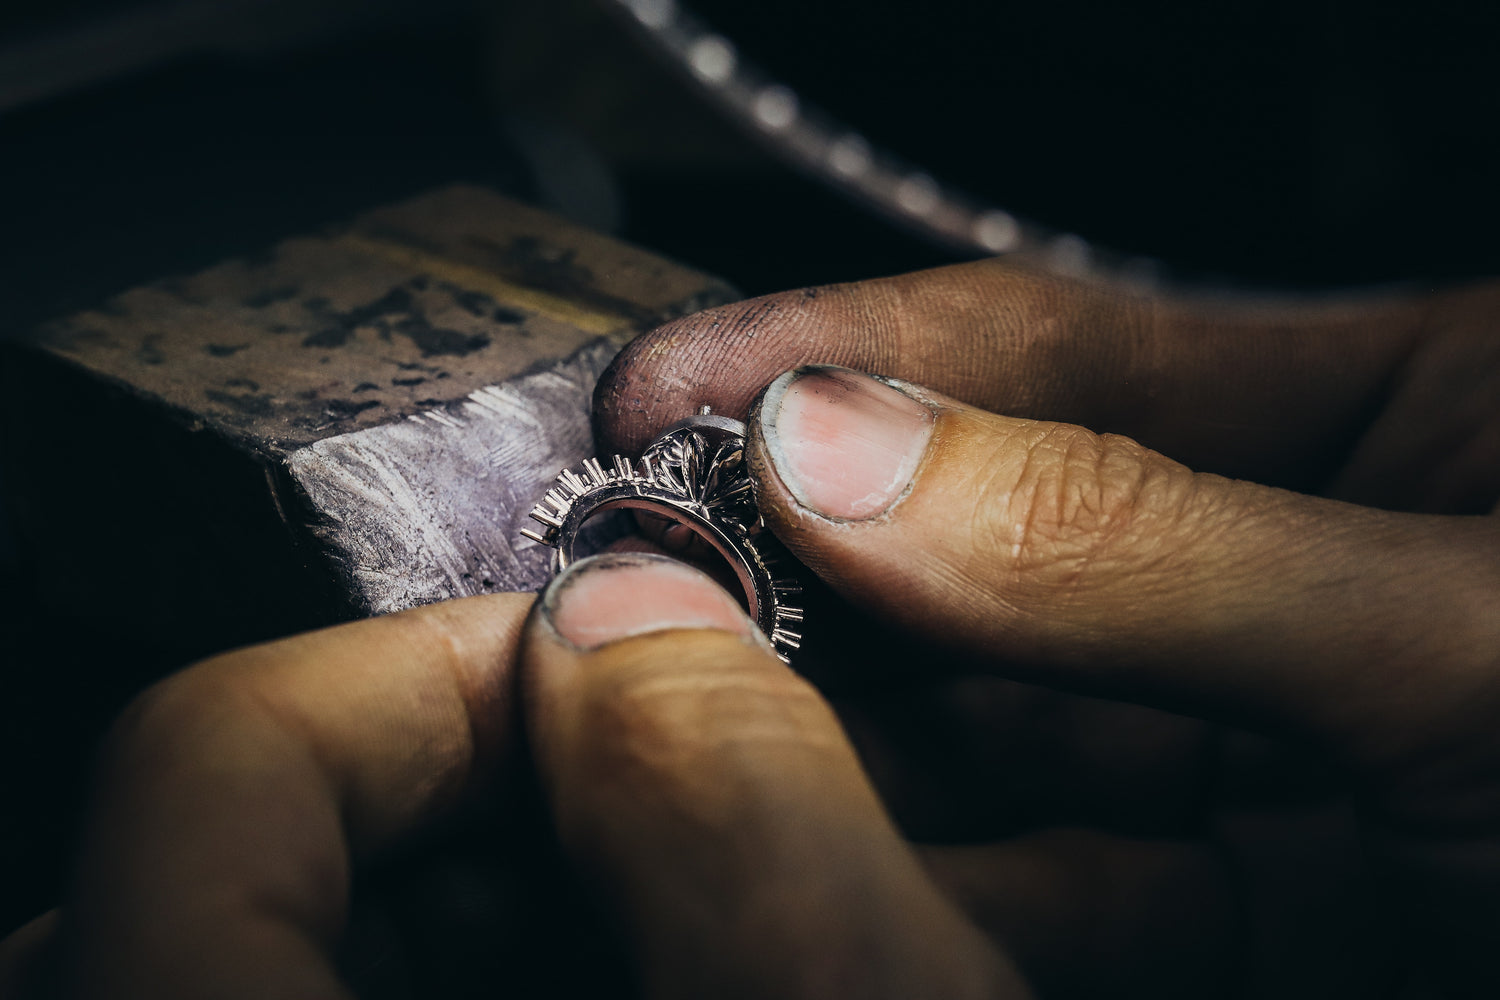 Hands examining a gemstone ring